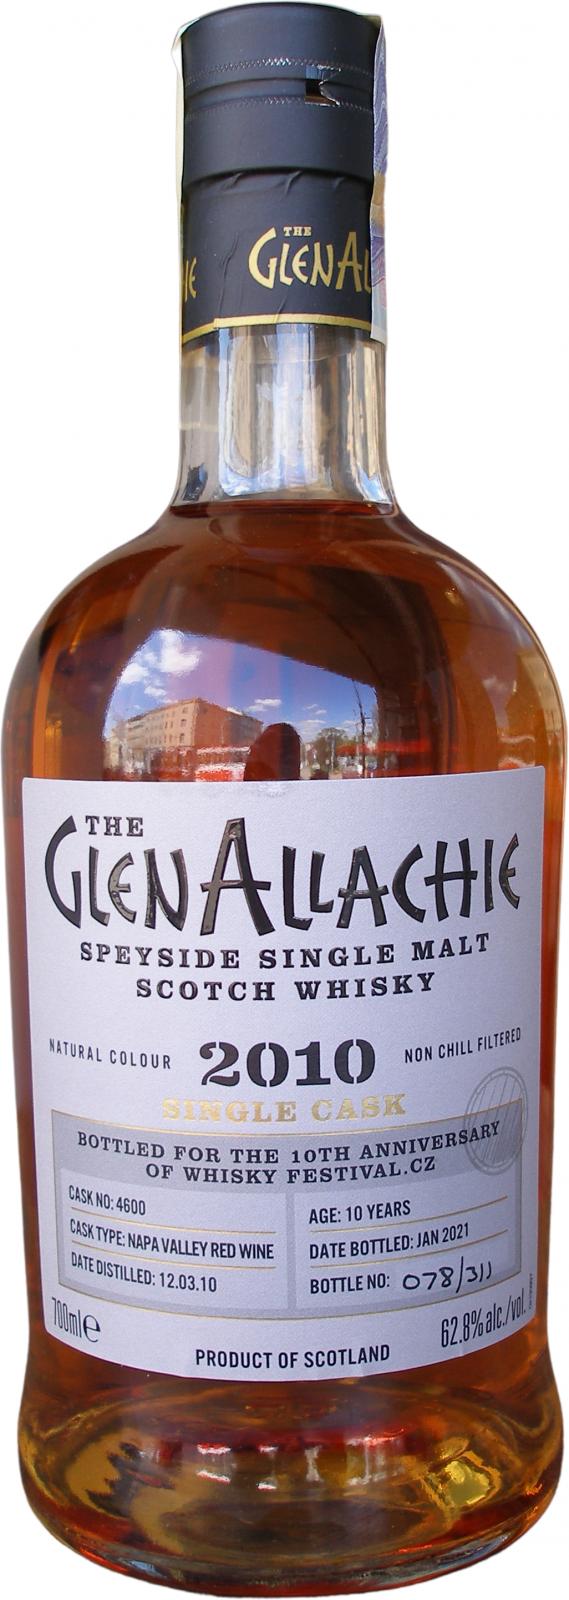 Glenallachie 2010